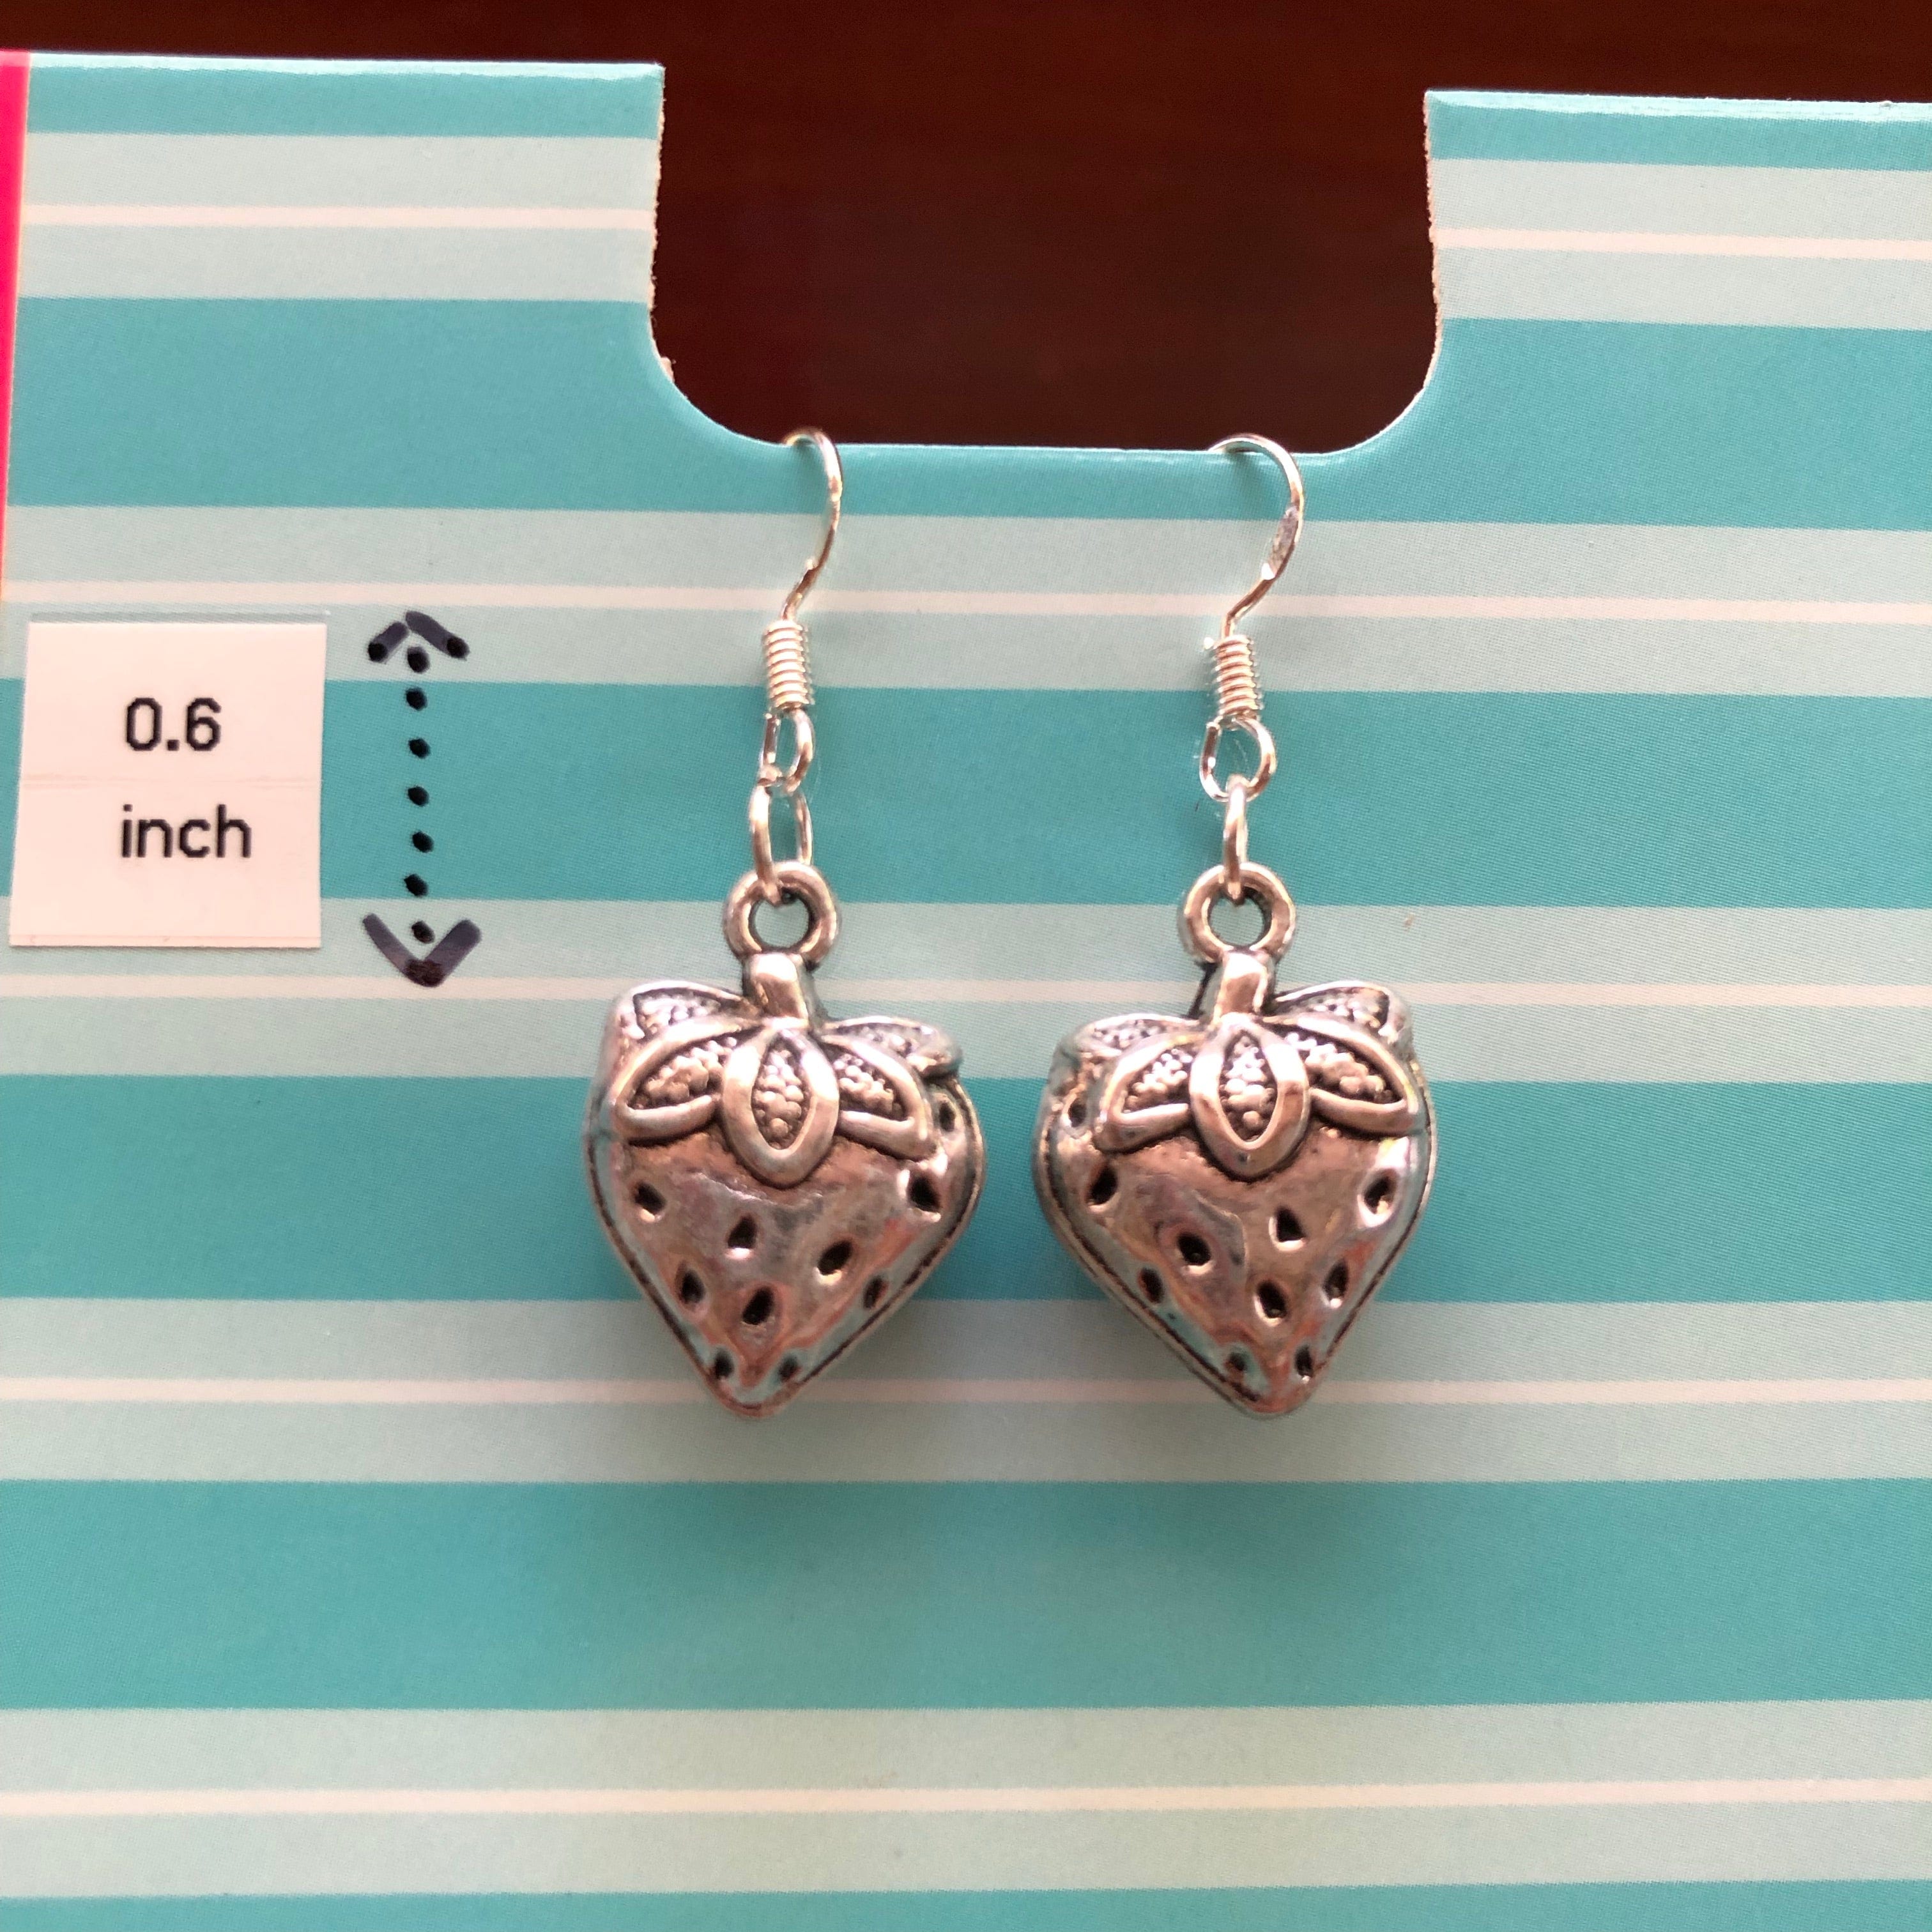 Macaron 3D Strawberry Earrings with Silver Hooks Kawaii Gifts 27667087